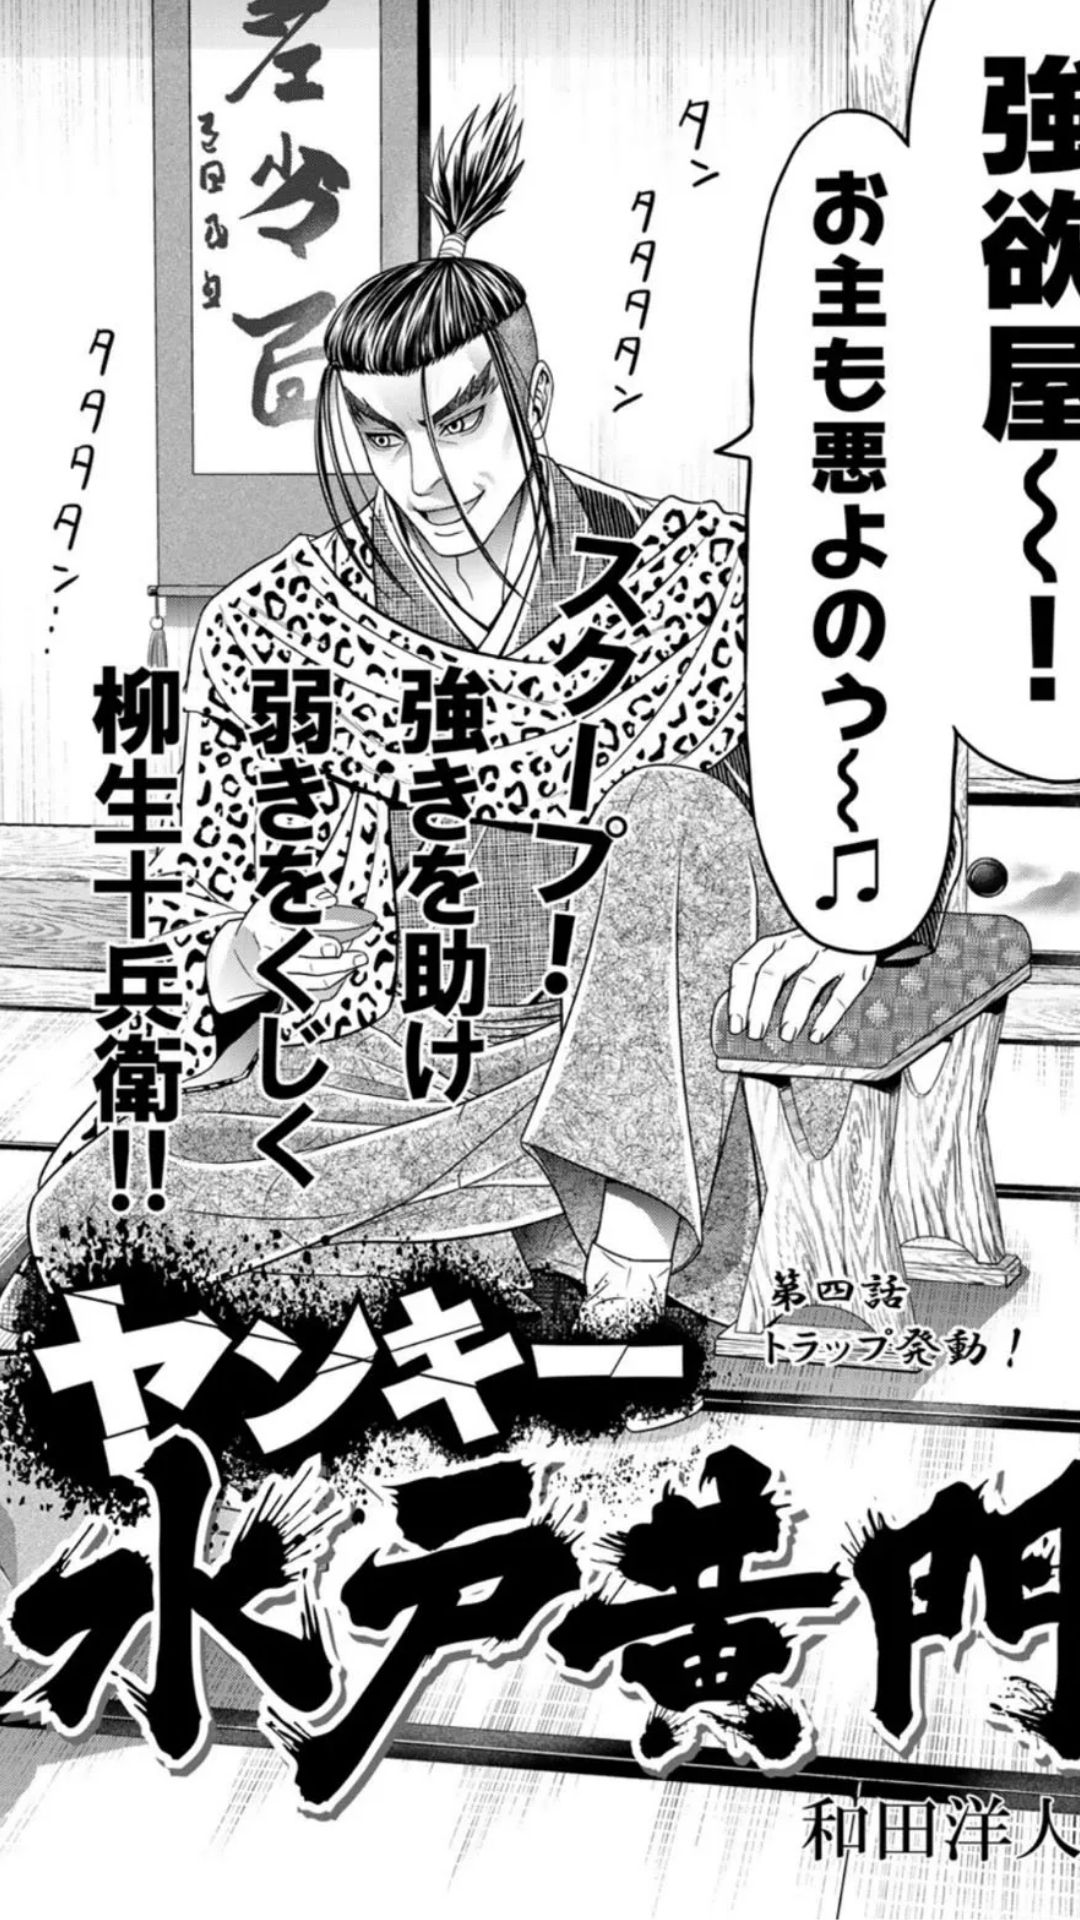 Yankee Mito Komon S Last Chapter Published By Kodansha Today